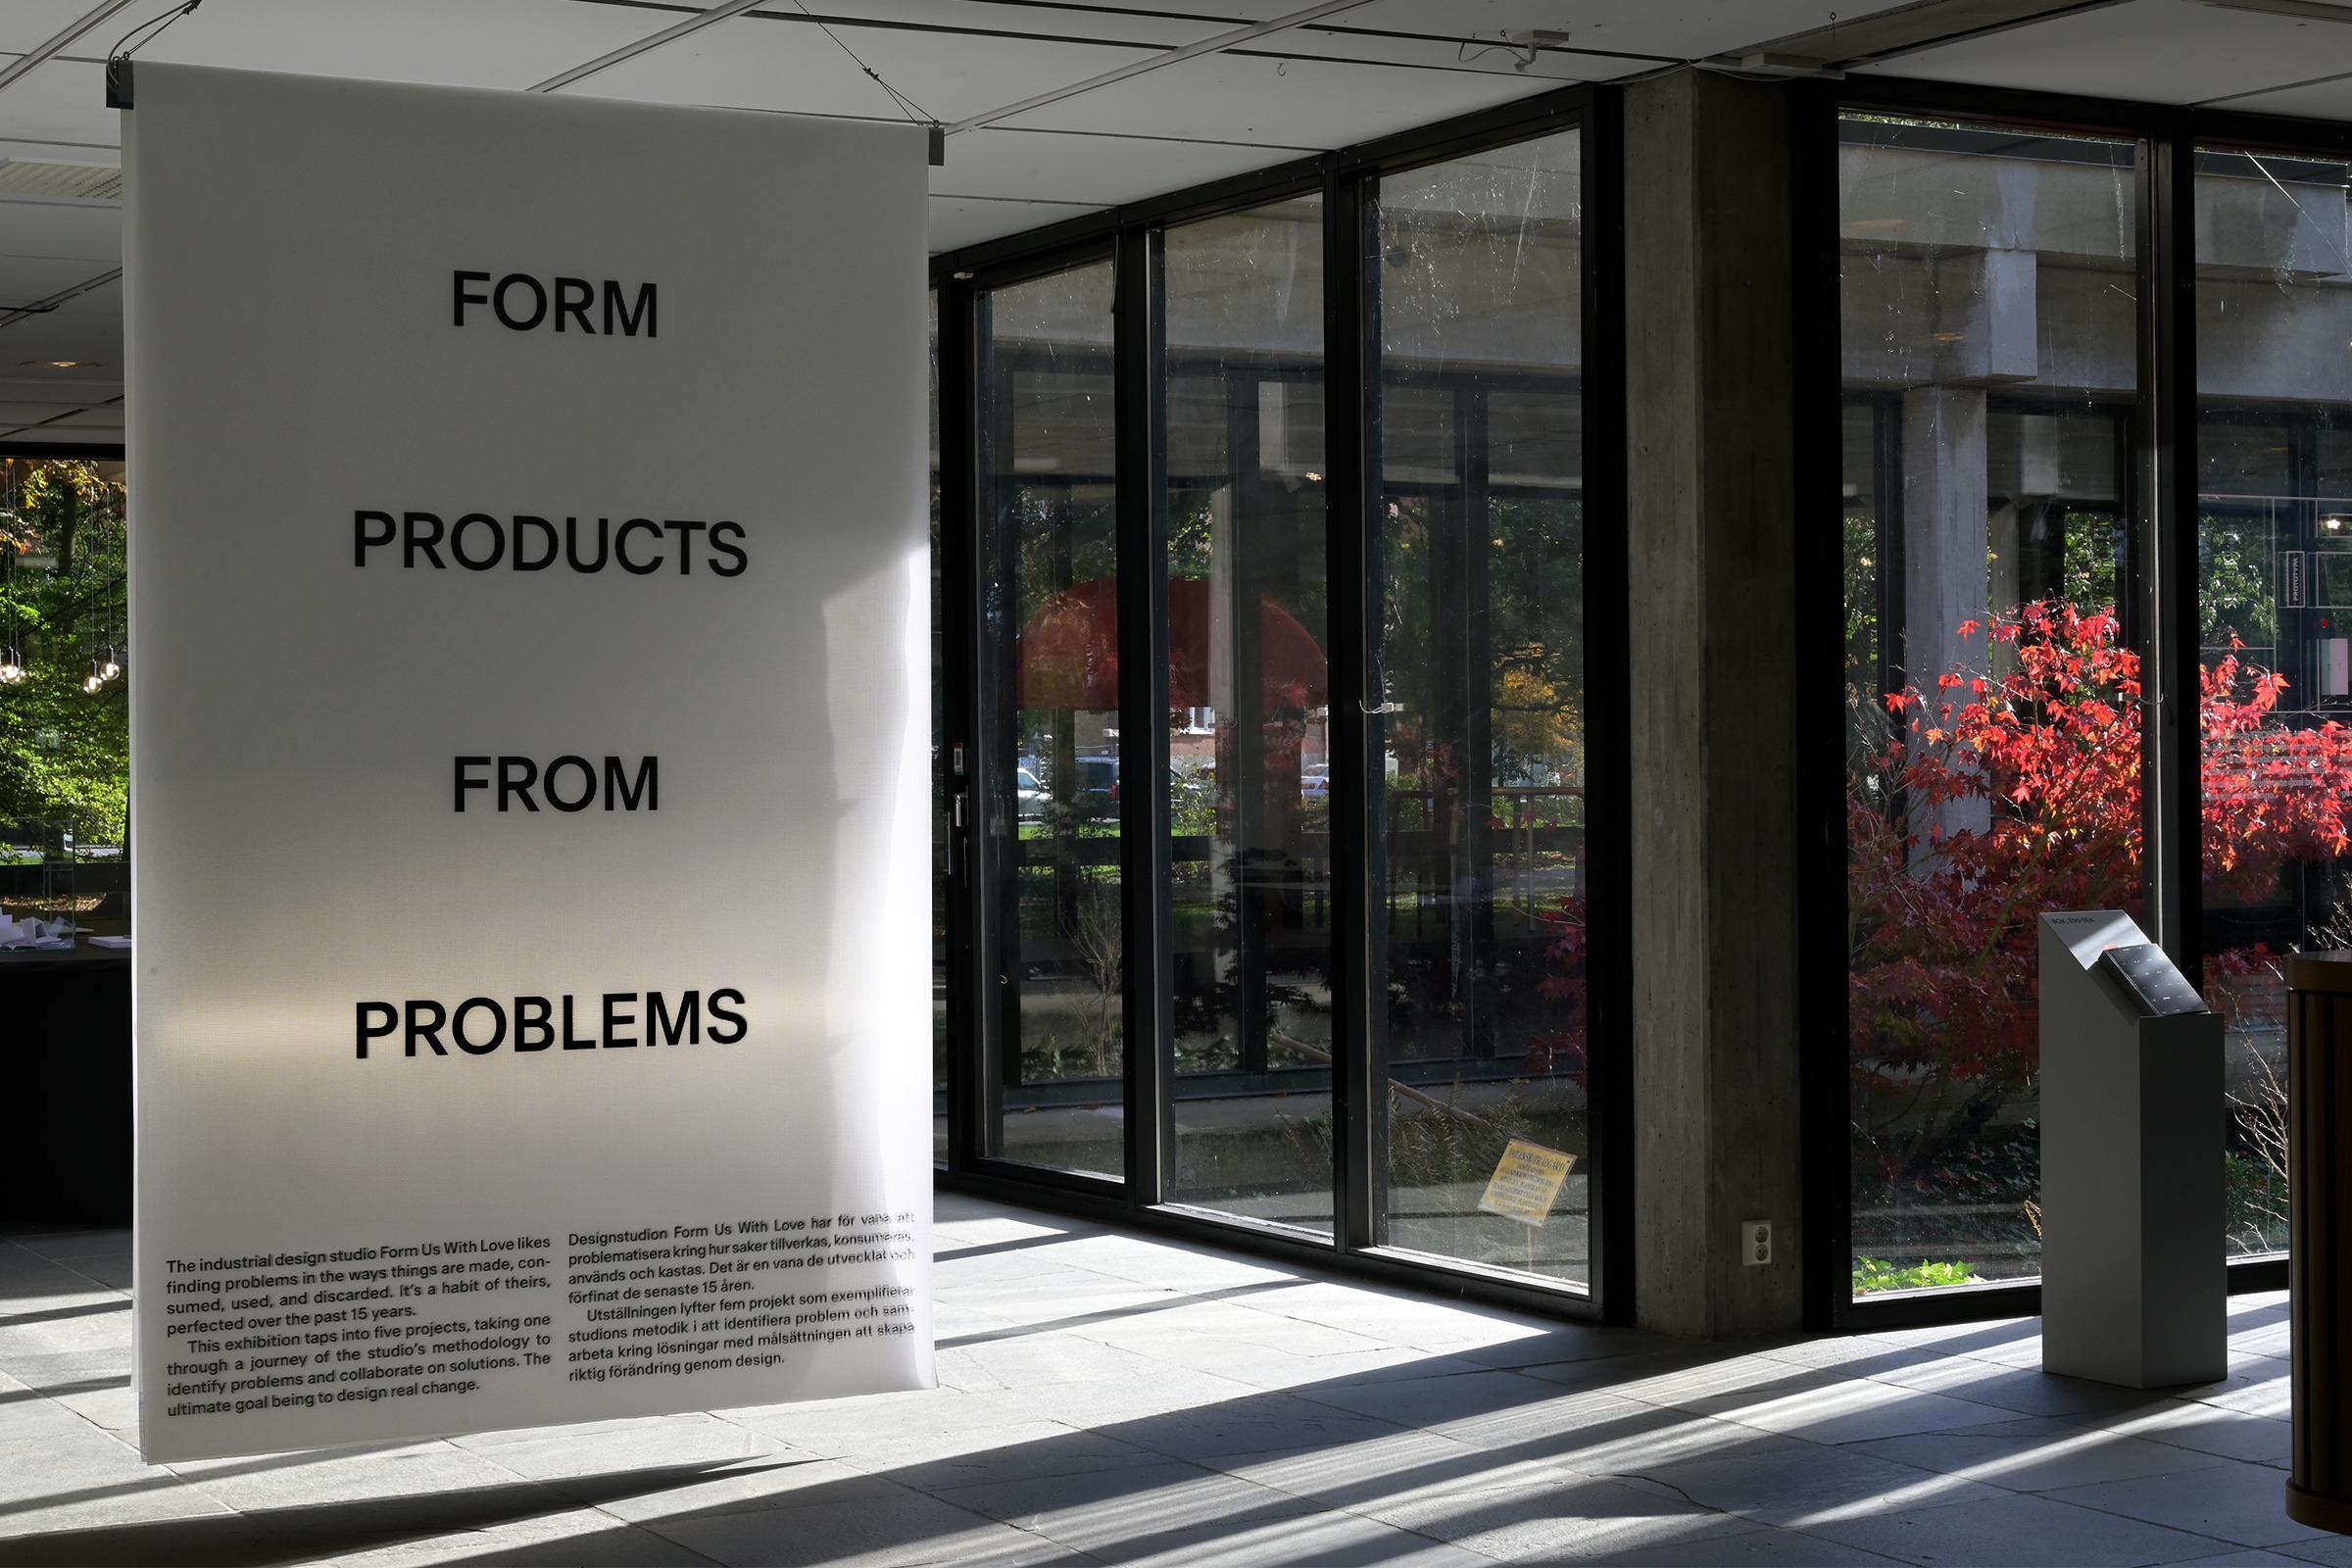 PROBLEMS Exhibition Design